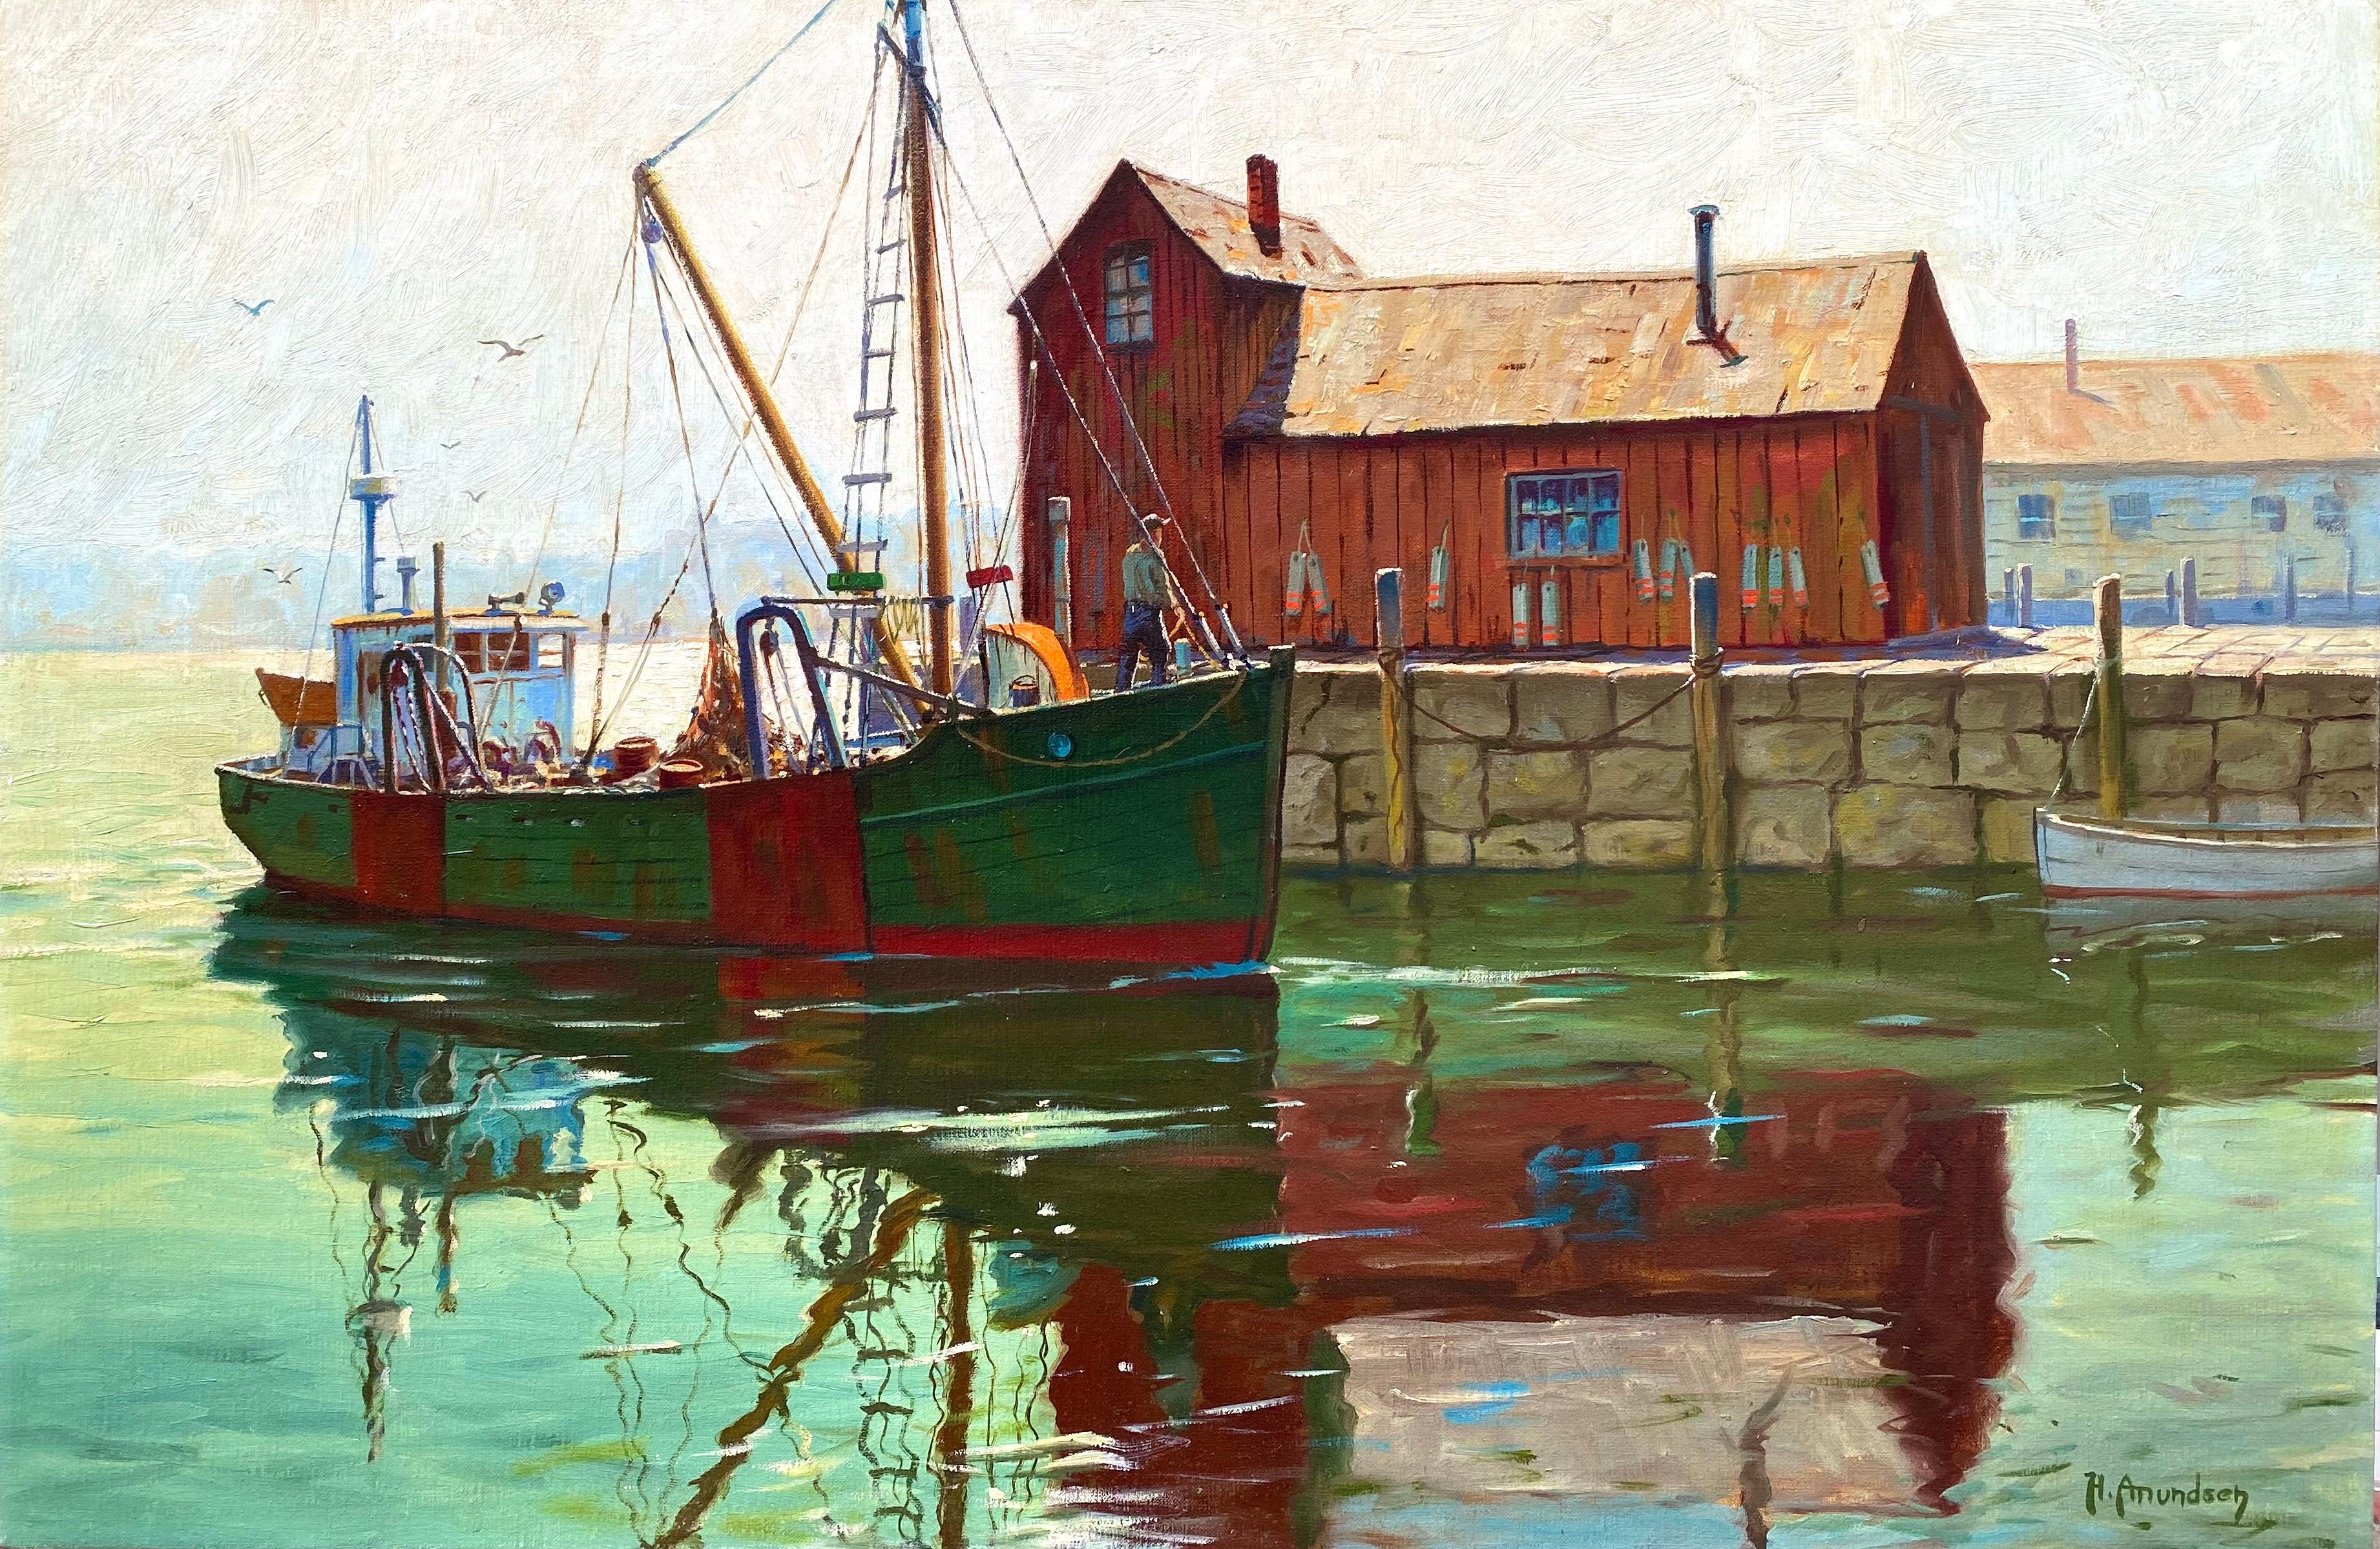 “Harbor Reflections” - Painting by Hjalmar Amundsen